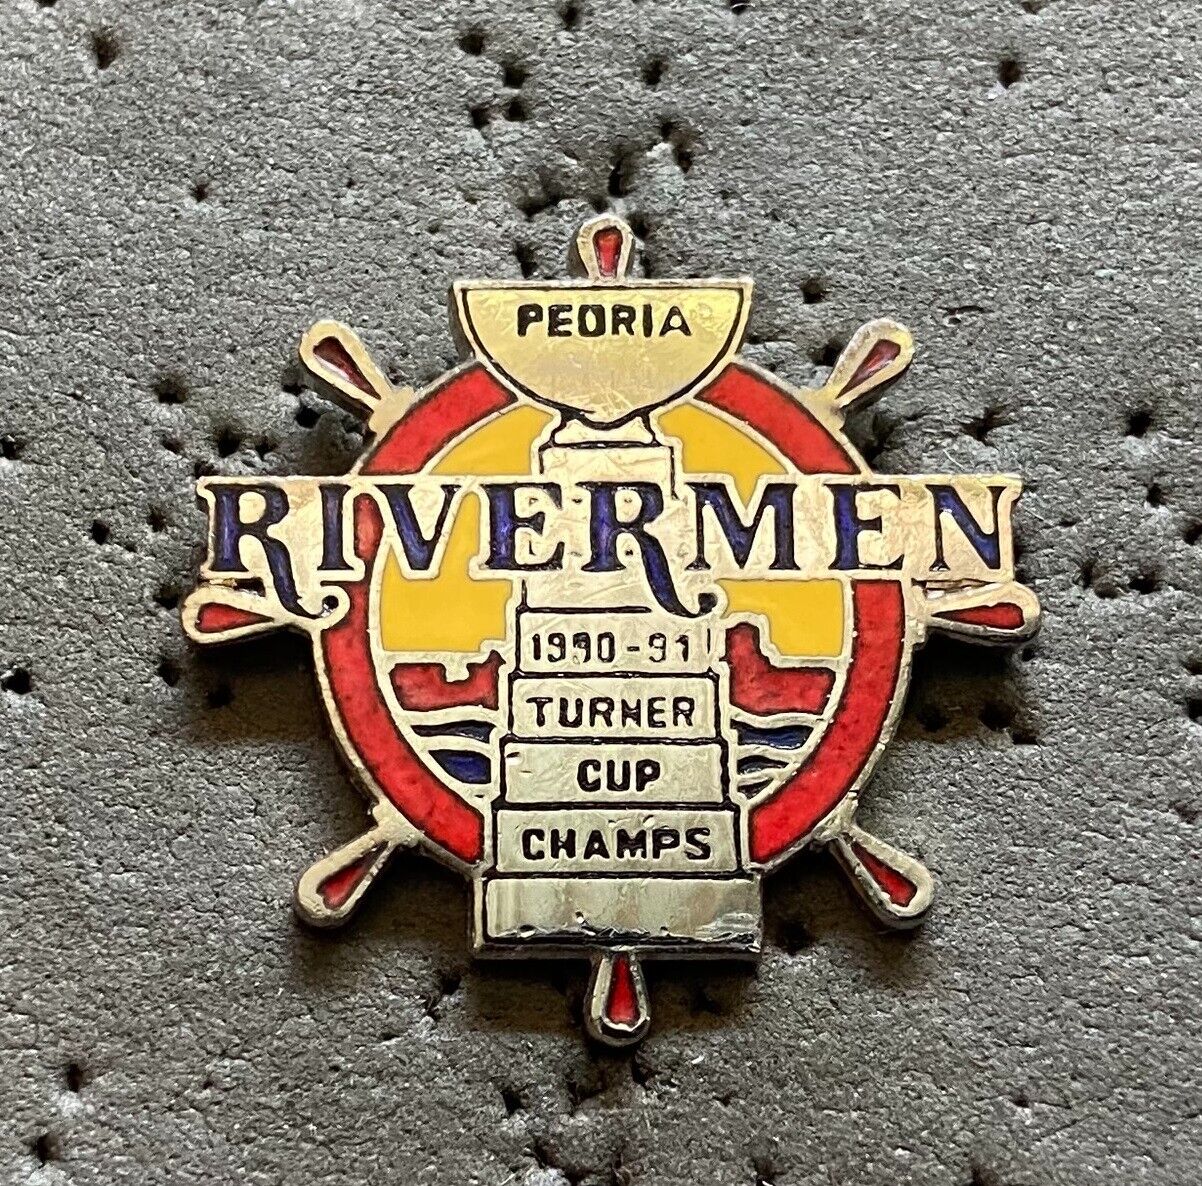 Peoria Rivermen 1990-91 Turner Cup Champs IHL Hockey Pin